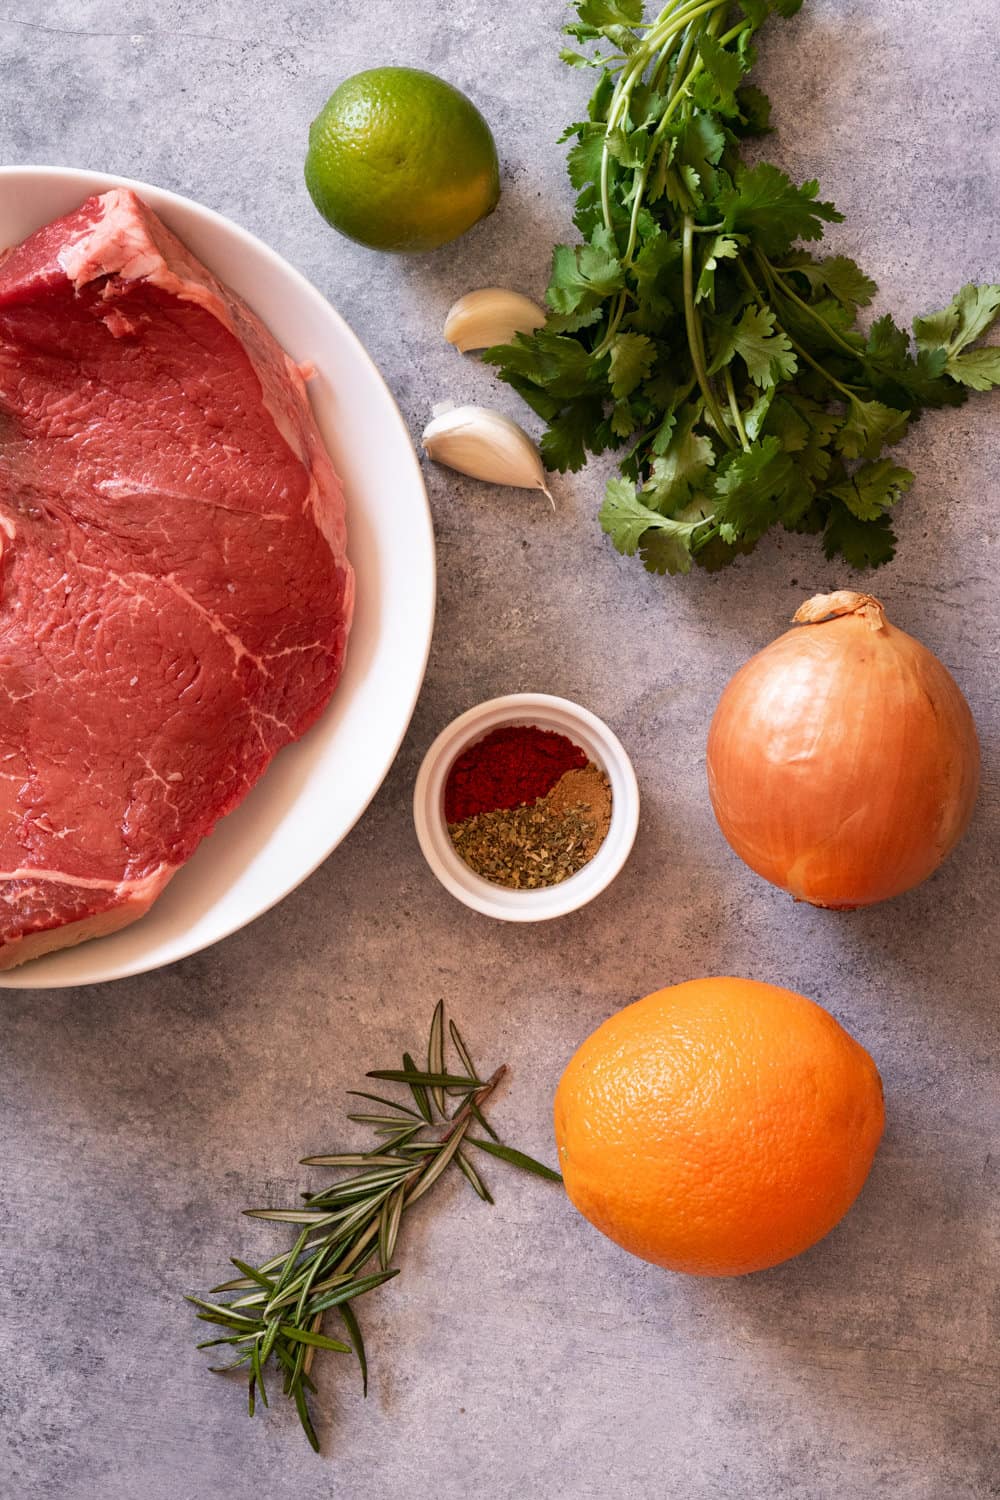 Ingredients to make marinated steak in the air fryer.